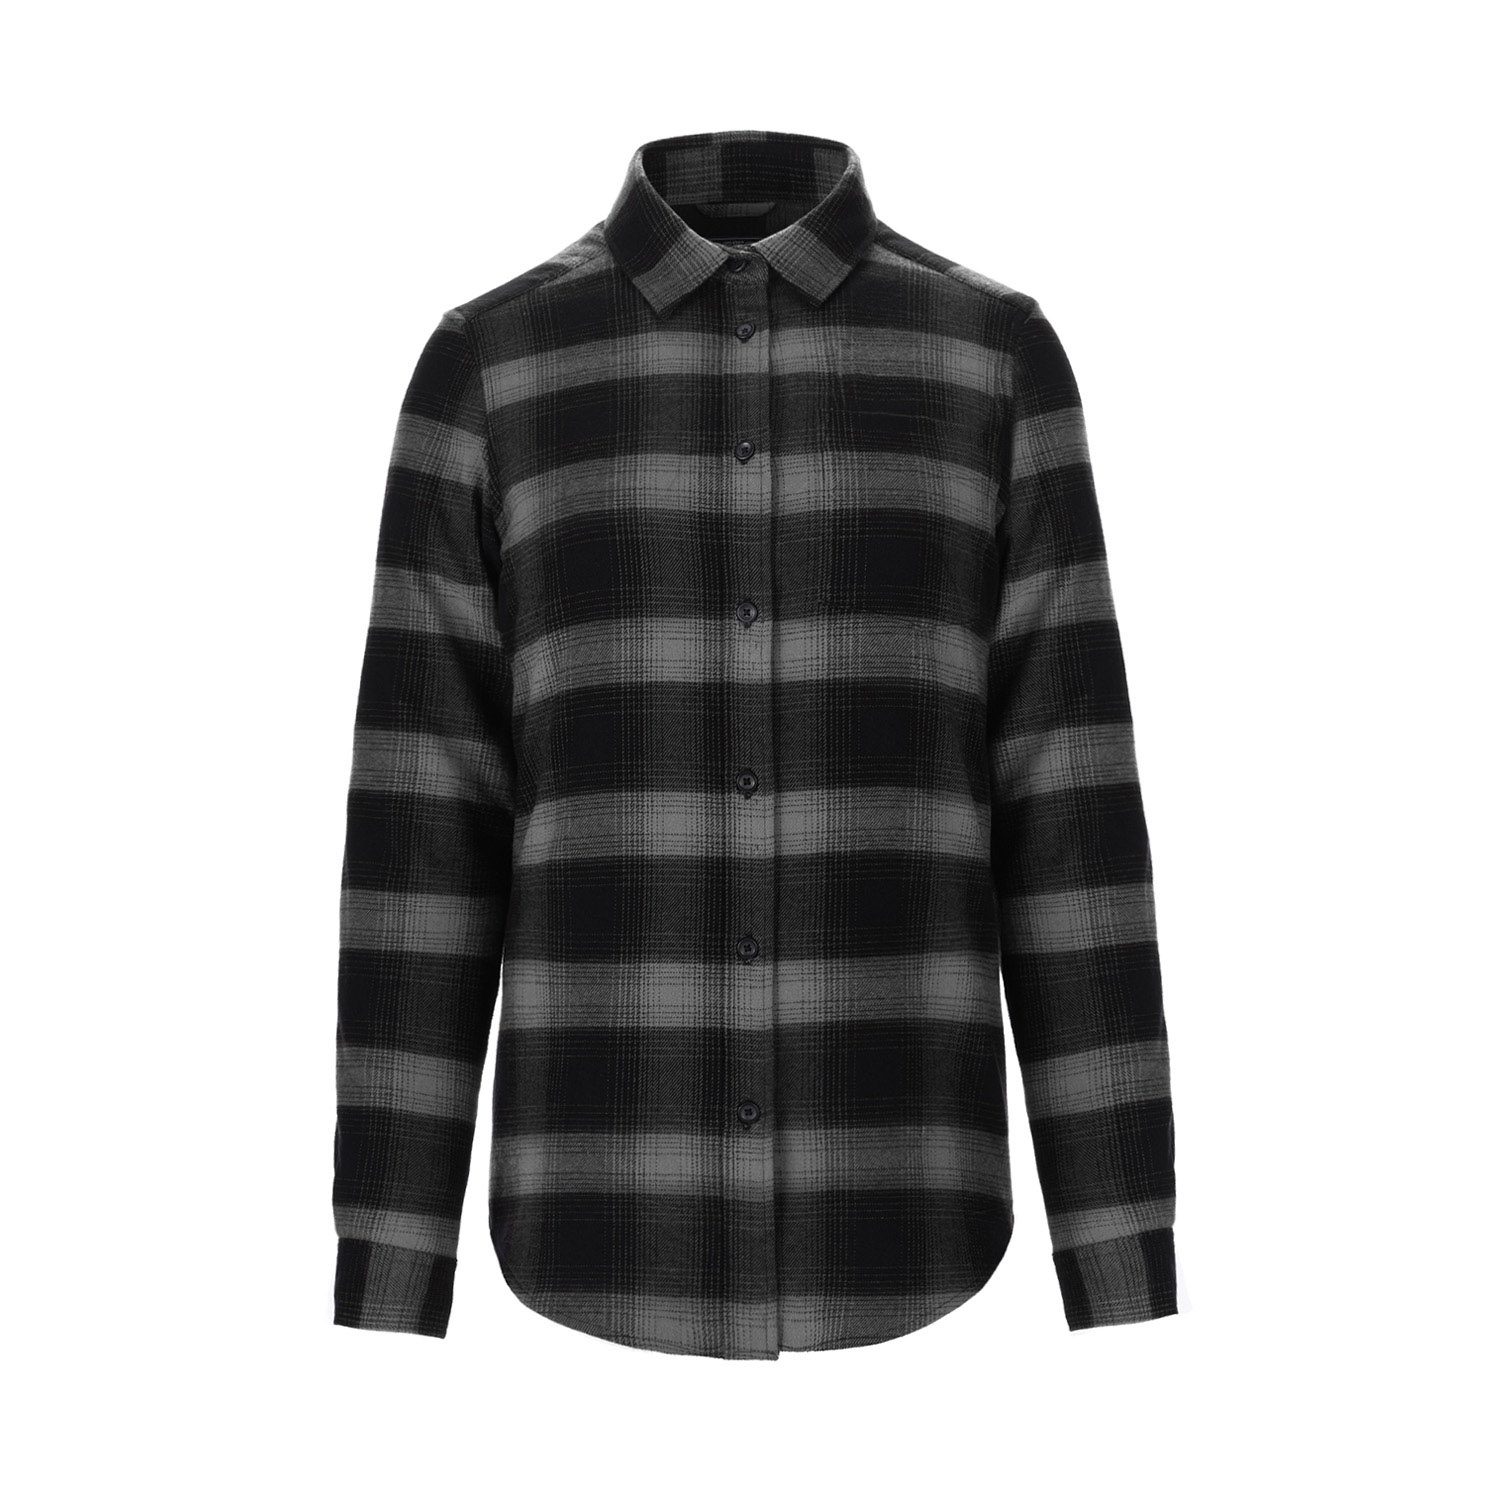 Canada Sportswear Ladies Brushed Flannel Shirt #S04506 Black